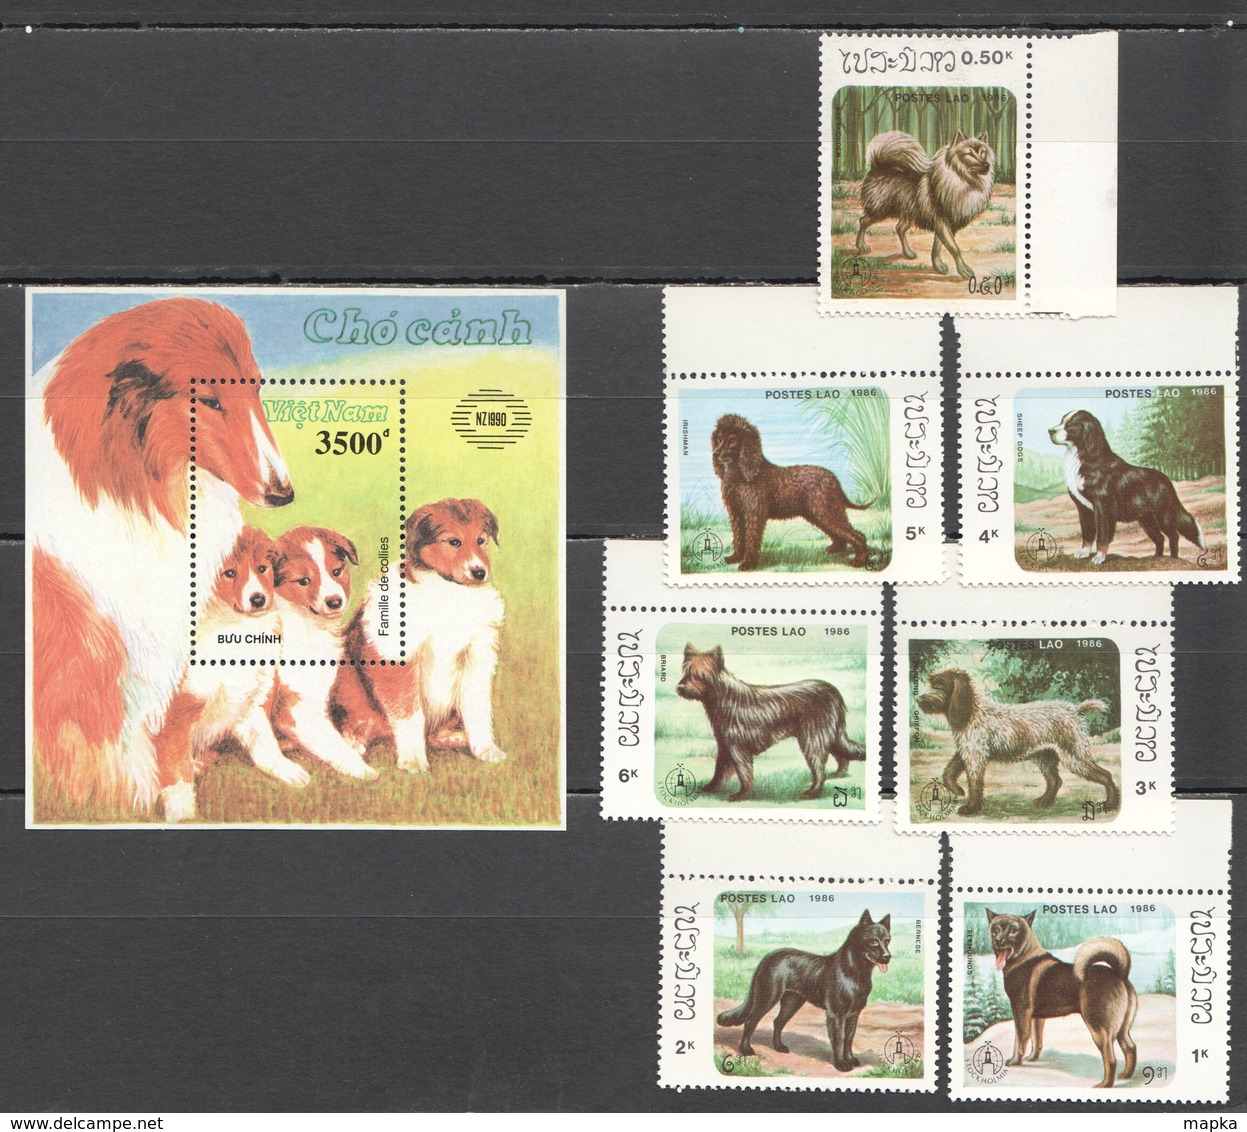 O1139 1986,1990 POSTES LAO,VIETNAM FAUNA PETS DOGS 1BL+1SET MNH - Hunde